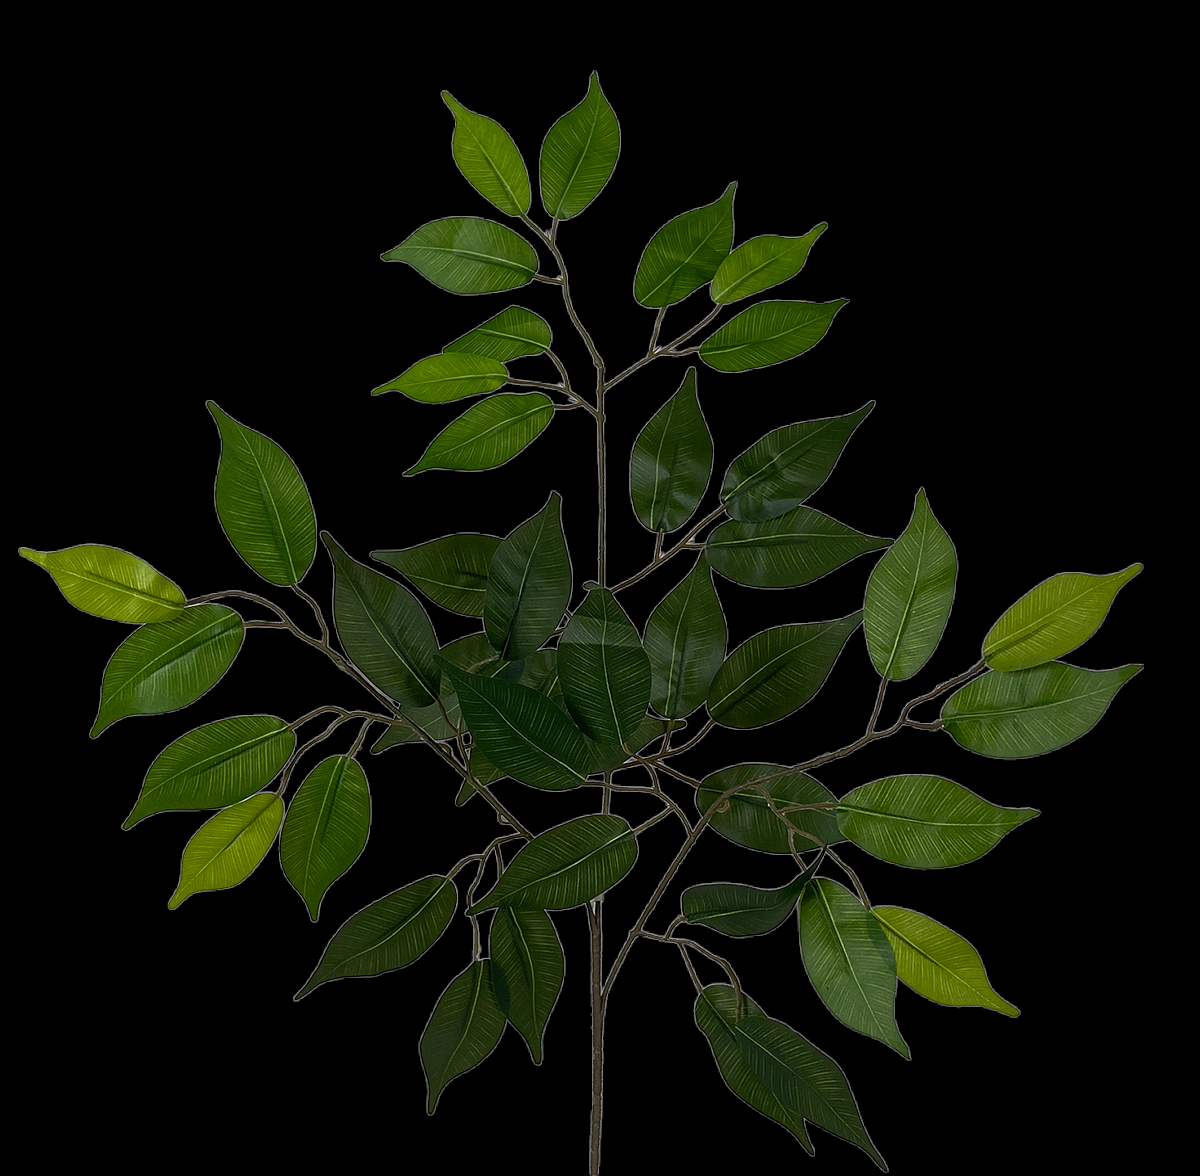 Ficus Branch S/12
16" x 25"